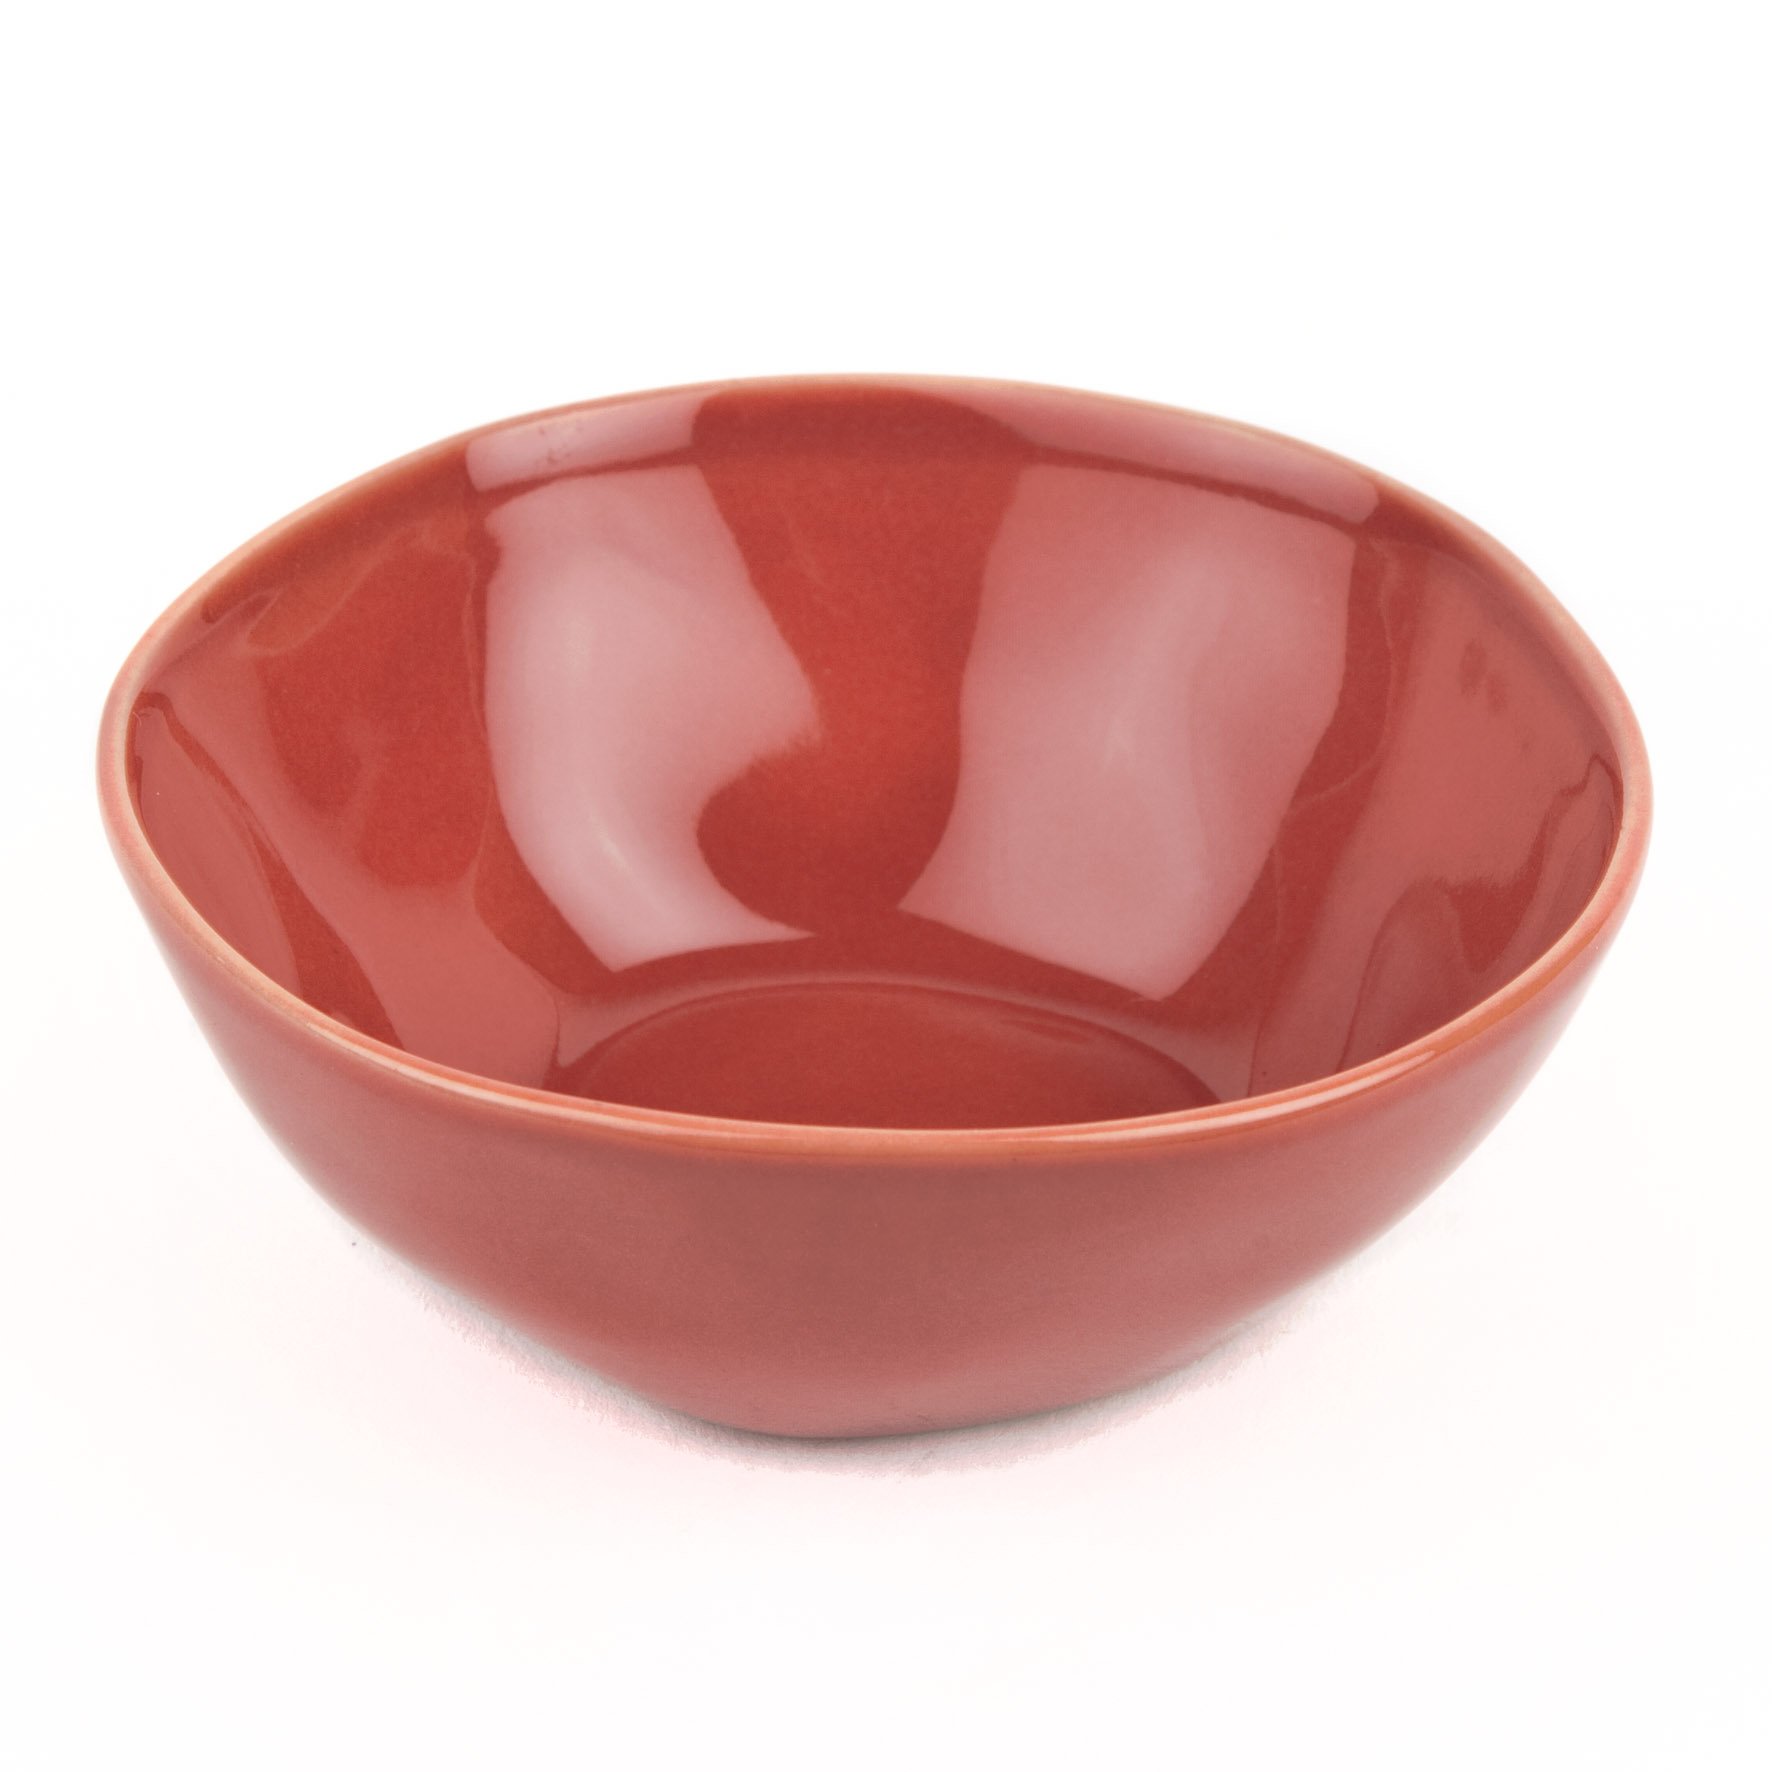 Quail's Egg Terracotta Ceramic Dipping Bowl Small